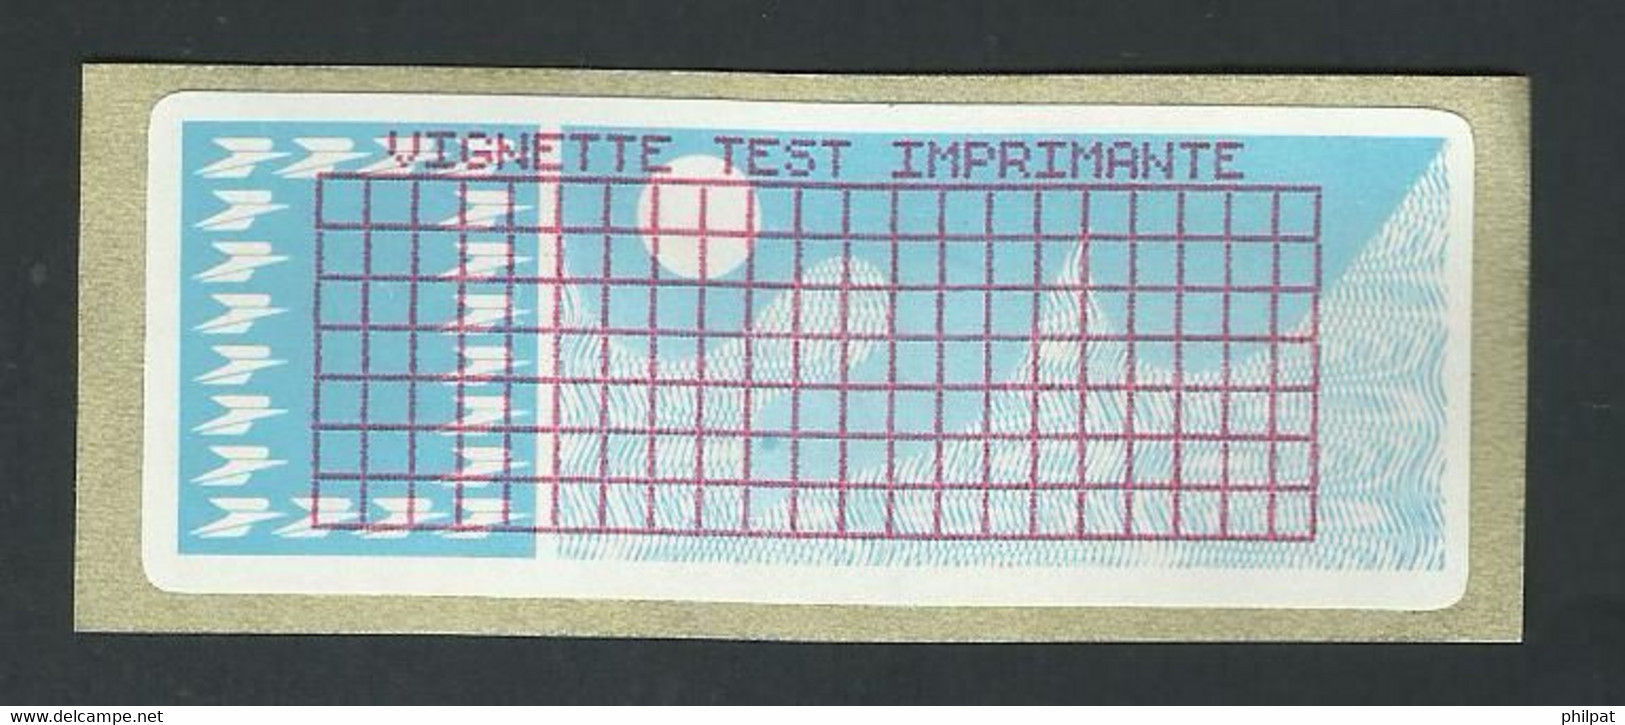 VIGNETTE TEST IMPRIMANTE - 1985 « Carrier » Paper